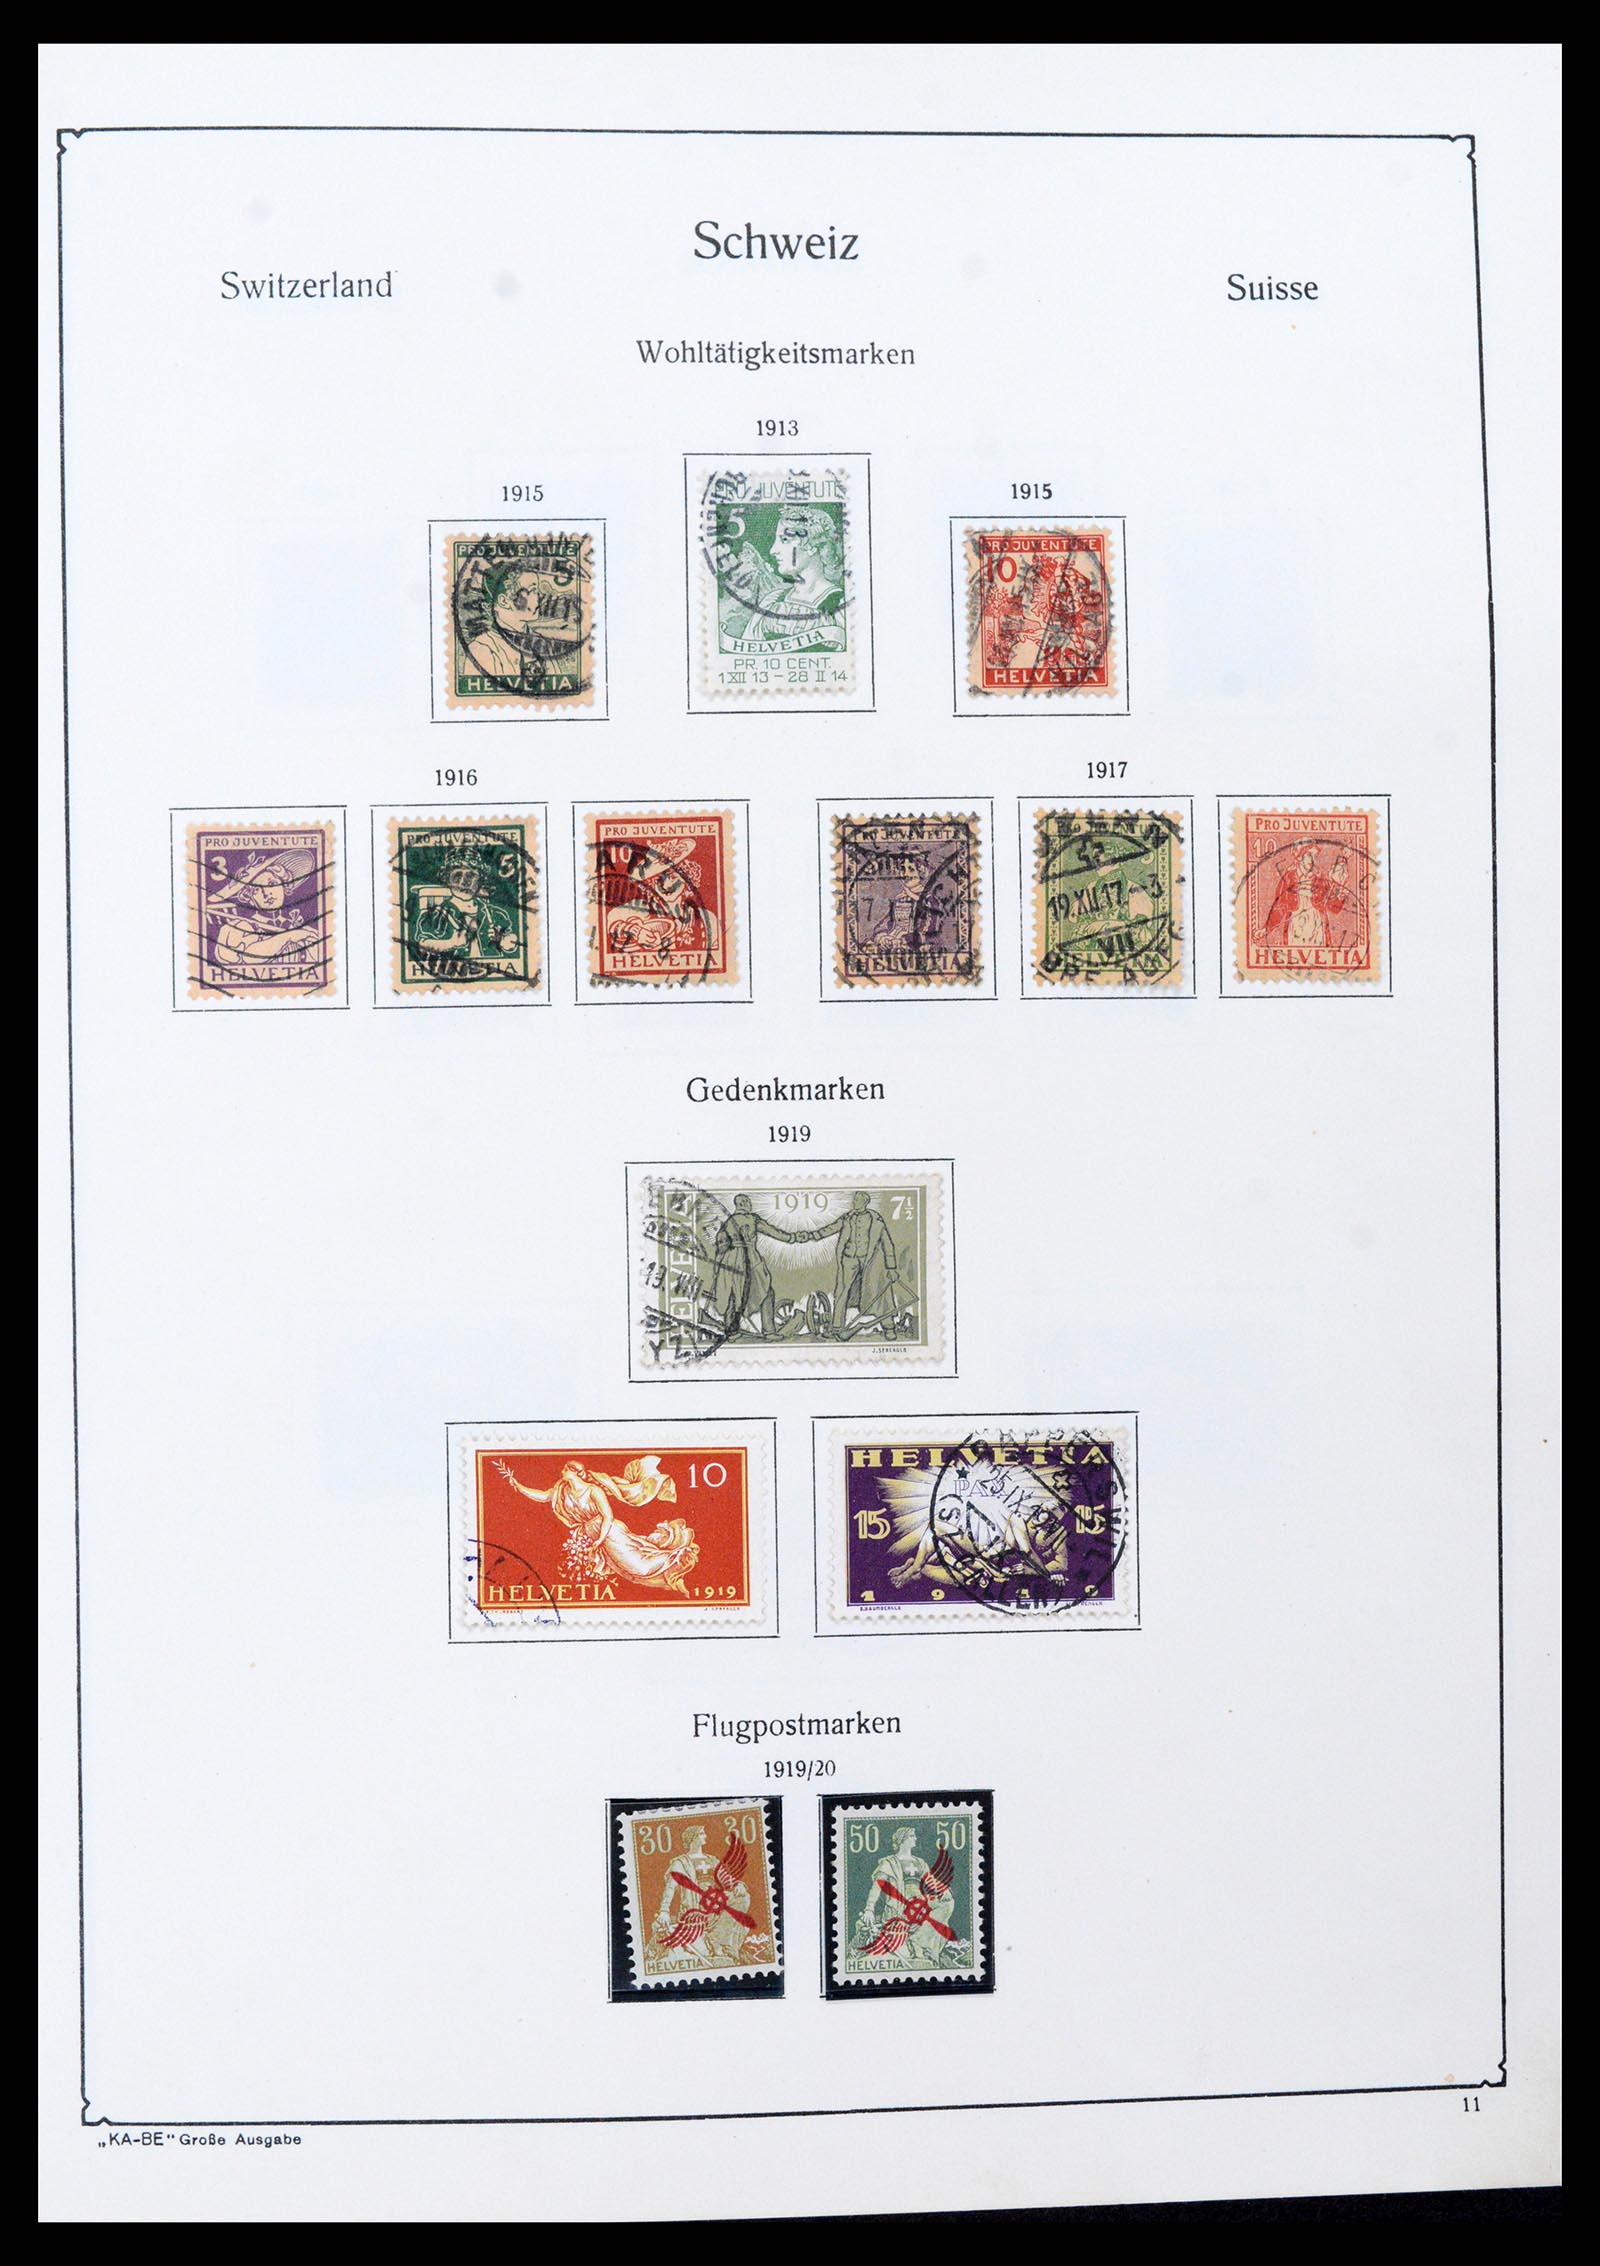 37588 010 - Stamp collection 37588 Switzerland 1854-1974.